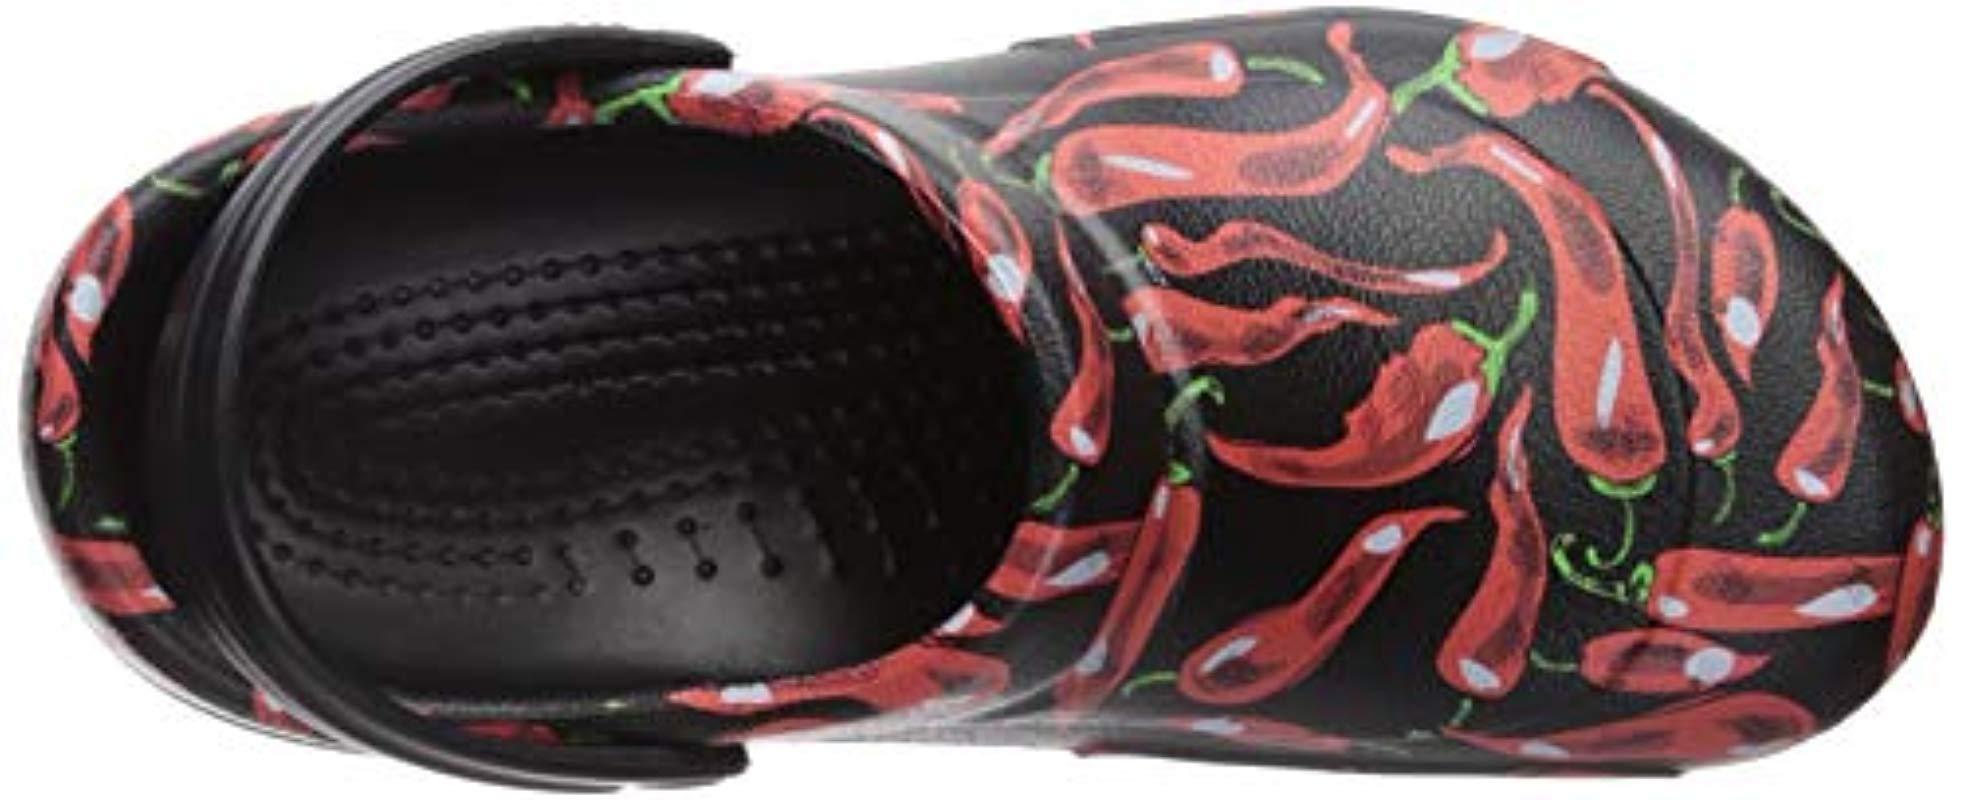 Crocs™ Adult Bistro Peppers Clog Black/red 4 Us / 6 Us M Us | Lyst